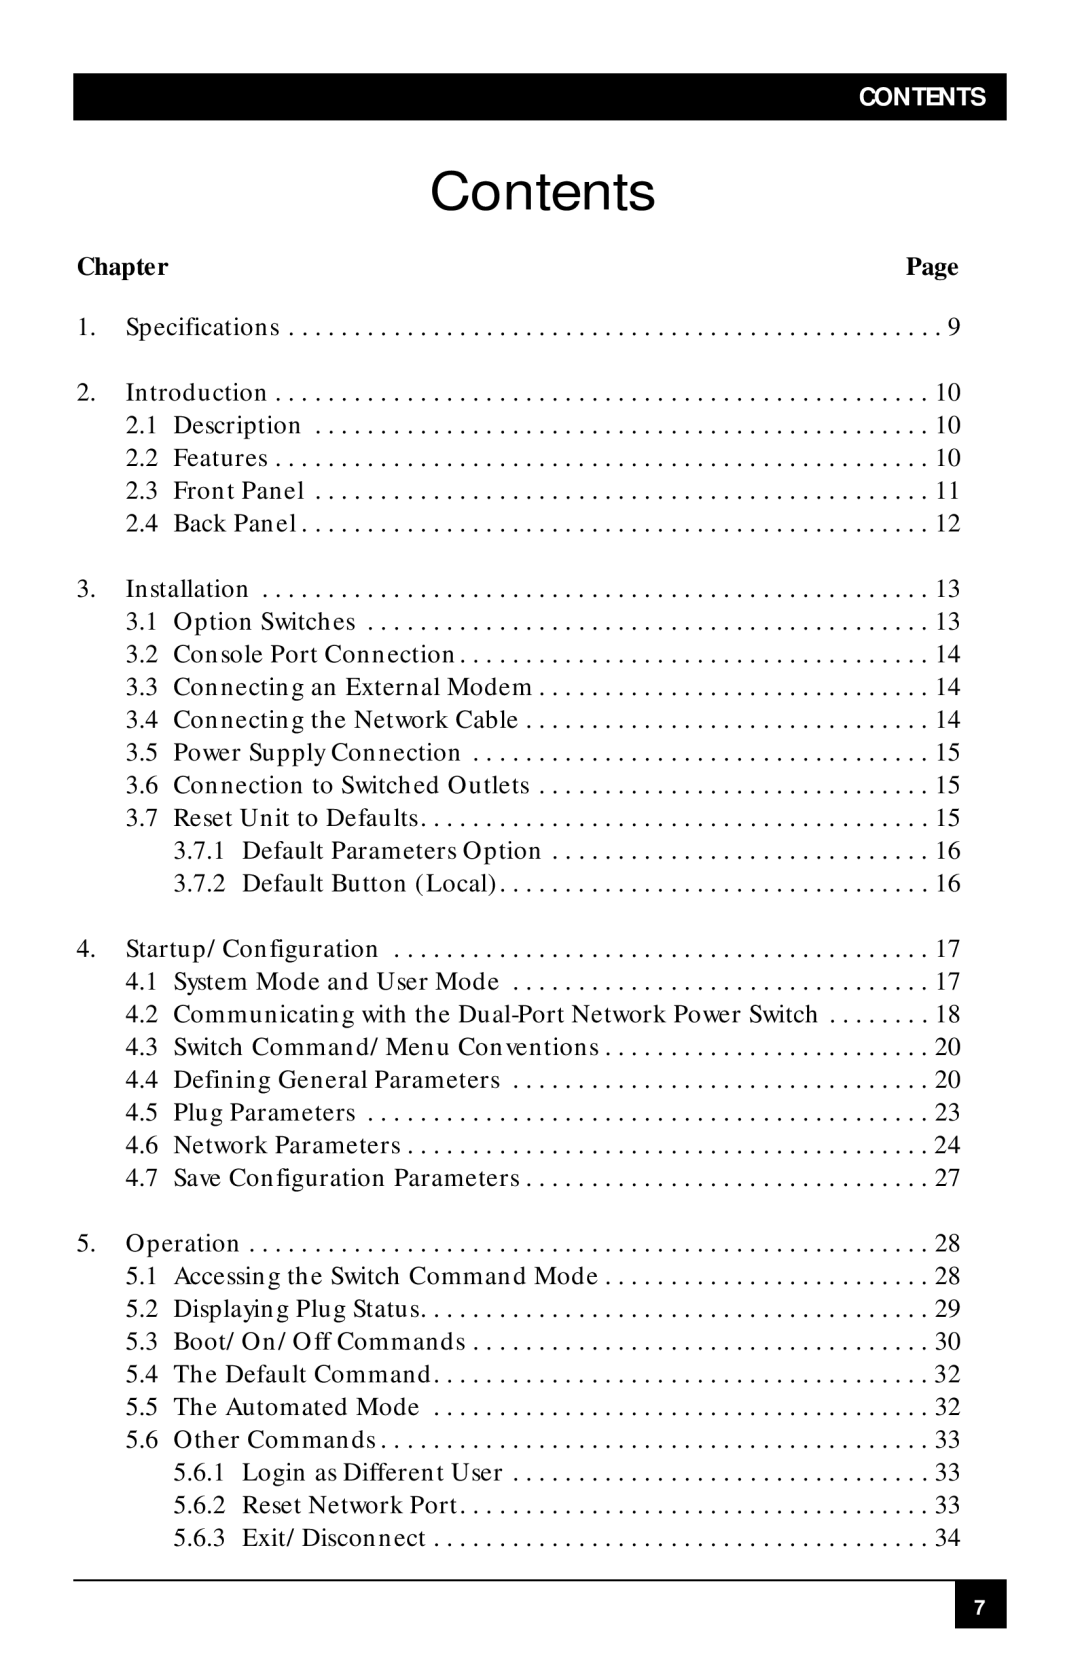 Black Box SWI081AE, SWI082 manual Contents, Chapter 